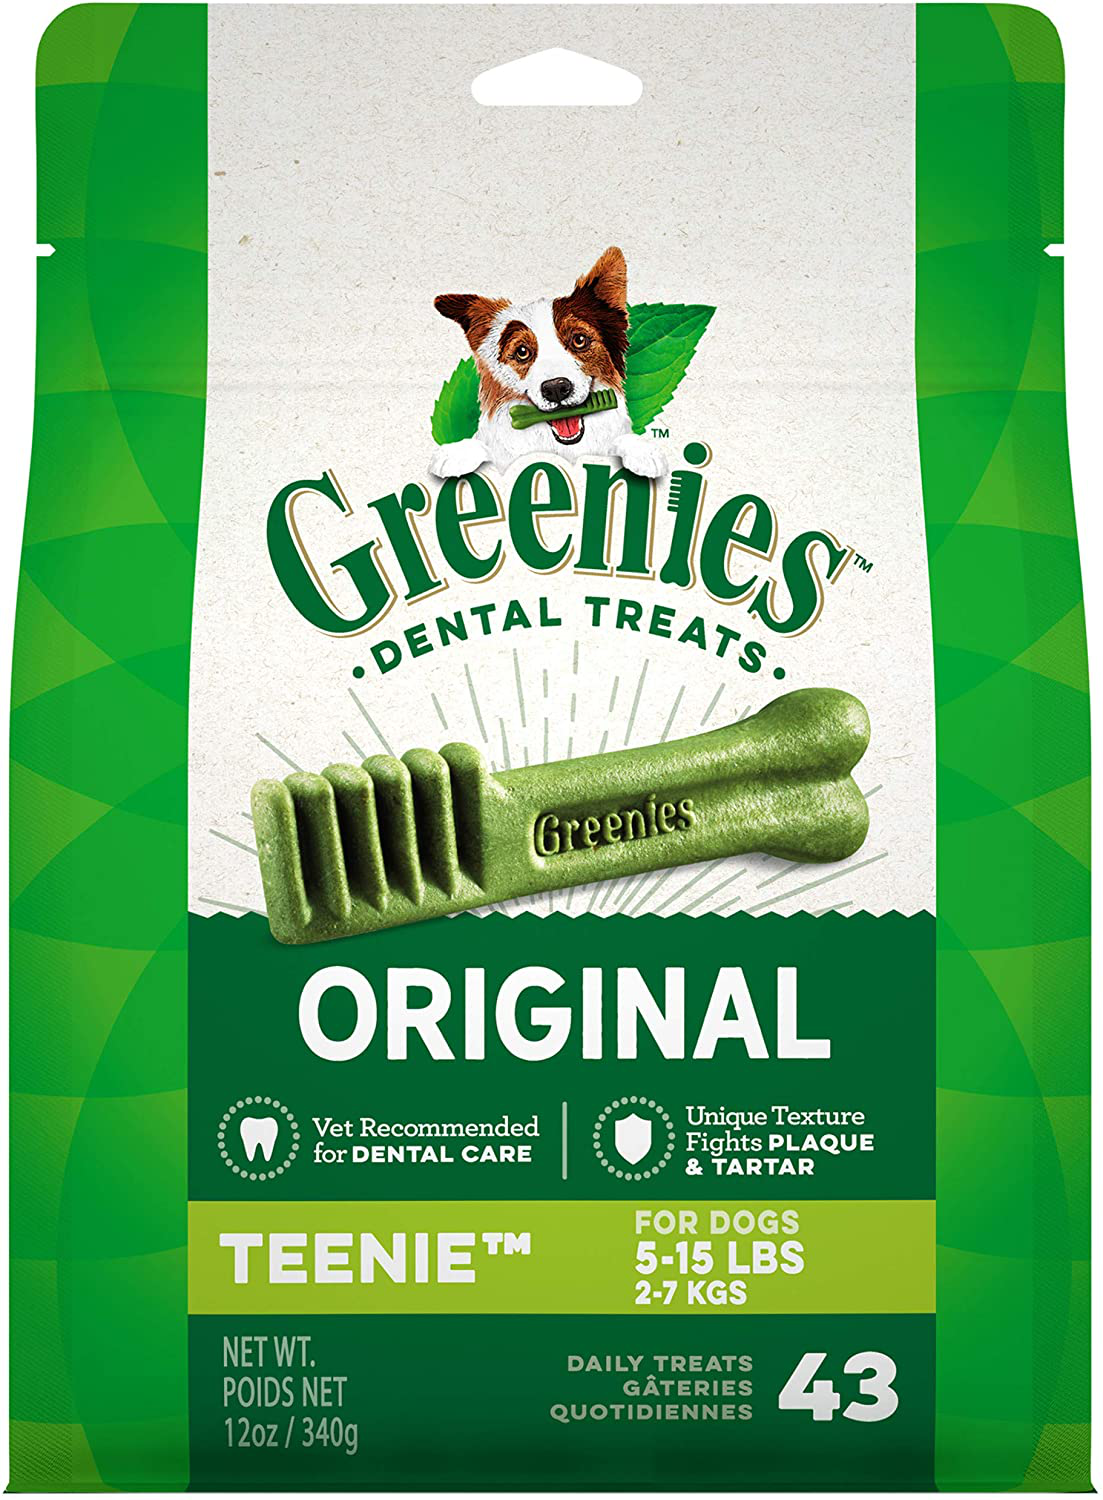 Greenies Original Teenie Natural Dental Dog Treats (5-15 lb. Dogs)